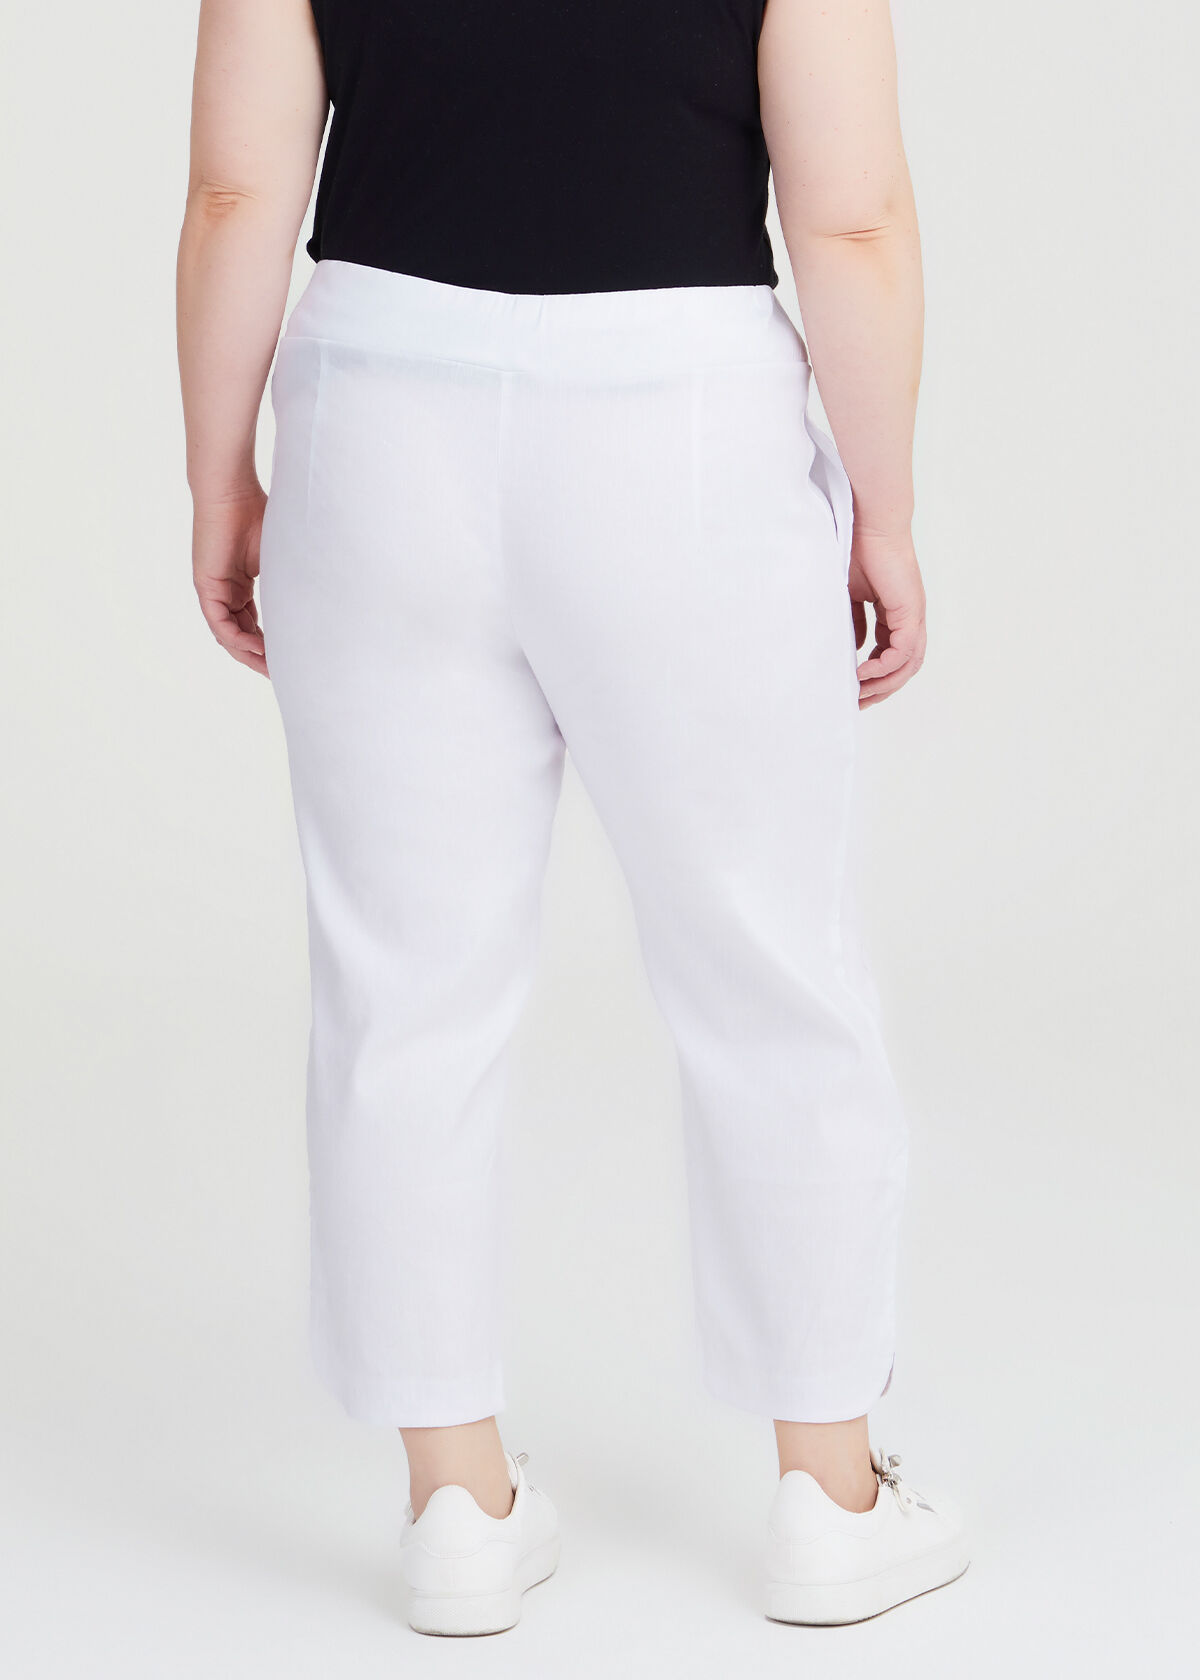 Next Petite White Linen Trousers Size 16 Inside Leg 28